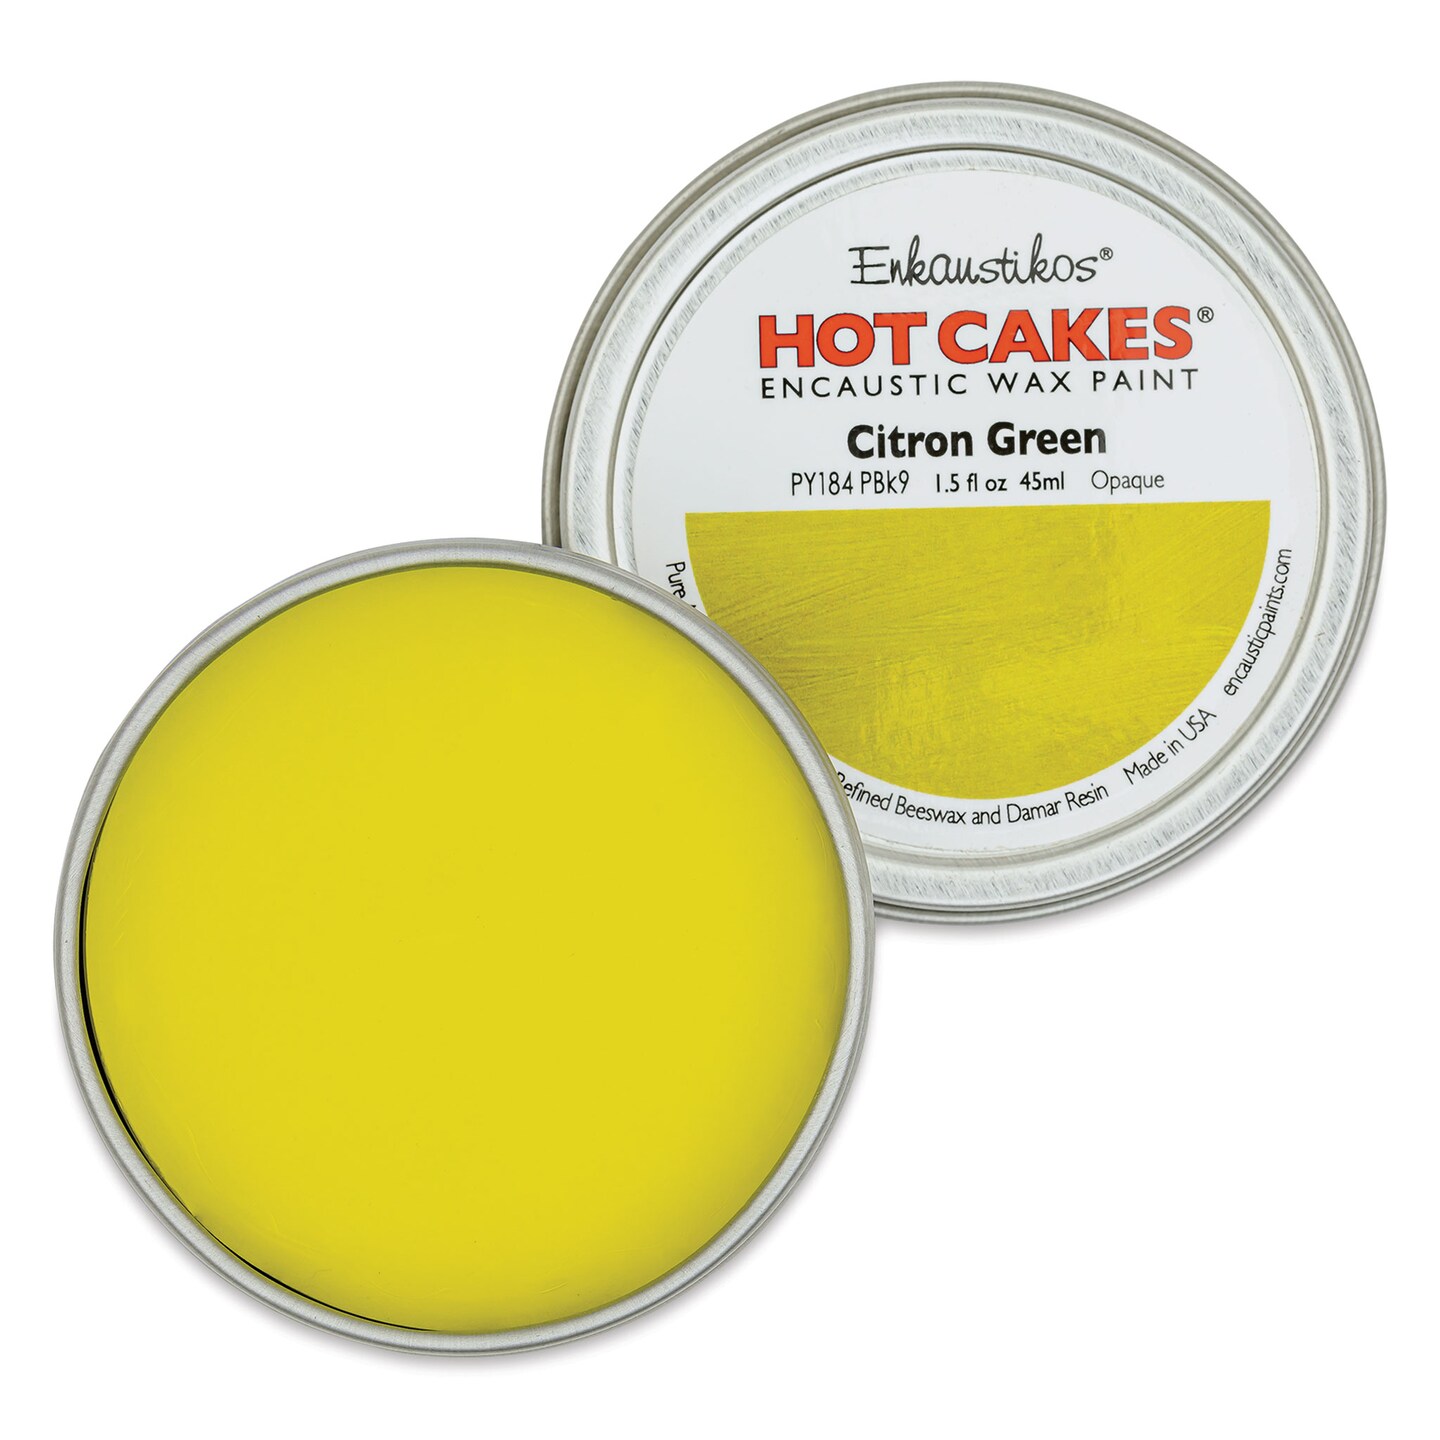 Enkaustikos Hot Cakes Encaustic Paint - Citron Green, 45 ml tin